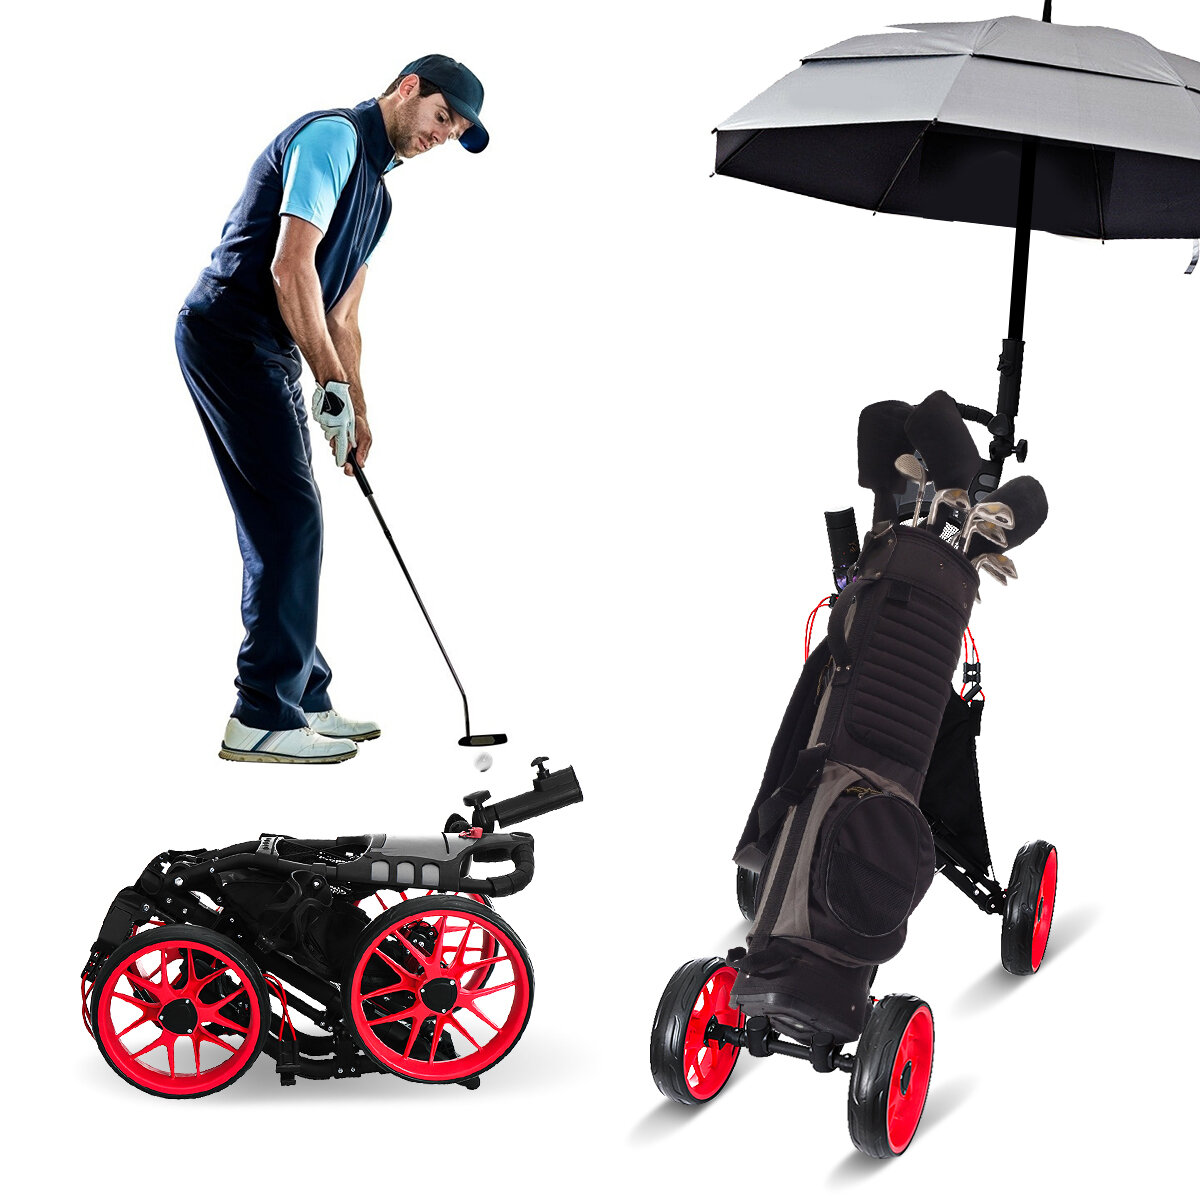 

89CM Aluminum 4 Wheel Folding Golf Cart Pull Push Golf Bag Trolley With Umbrella Cup Holder